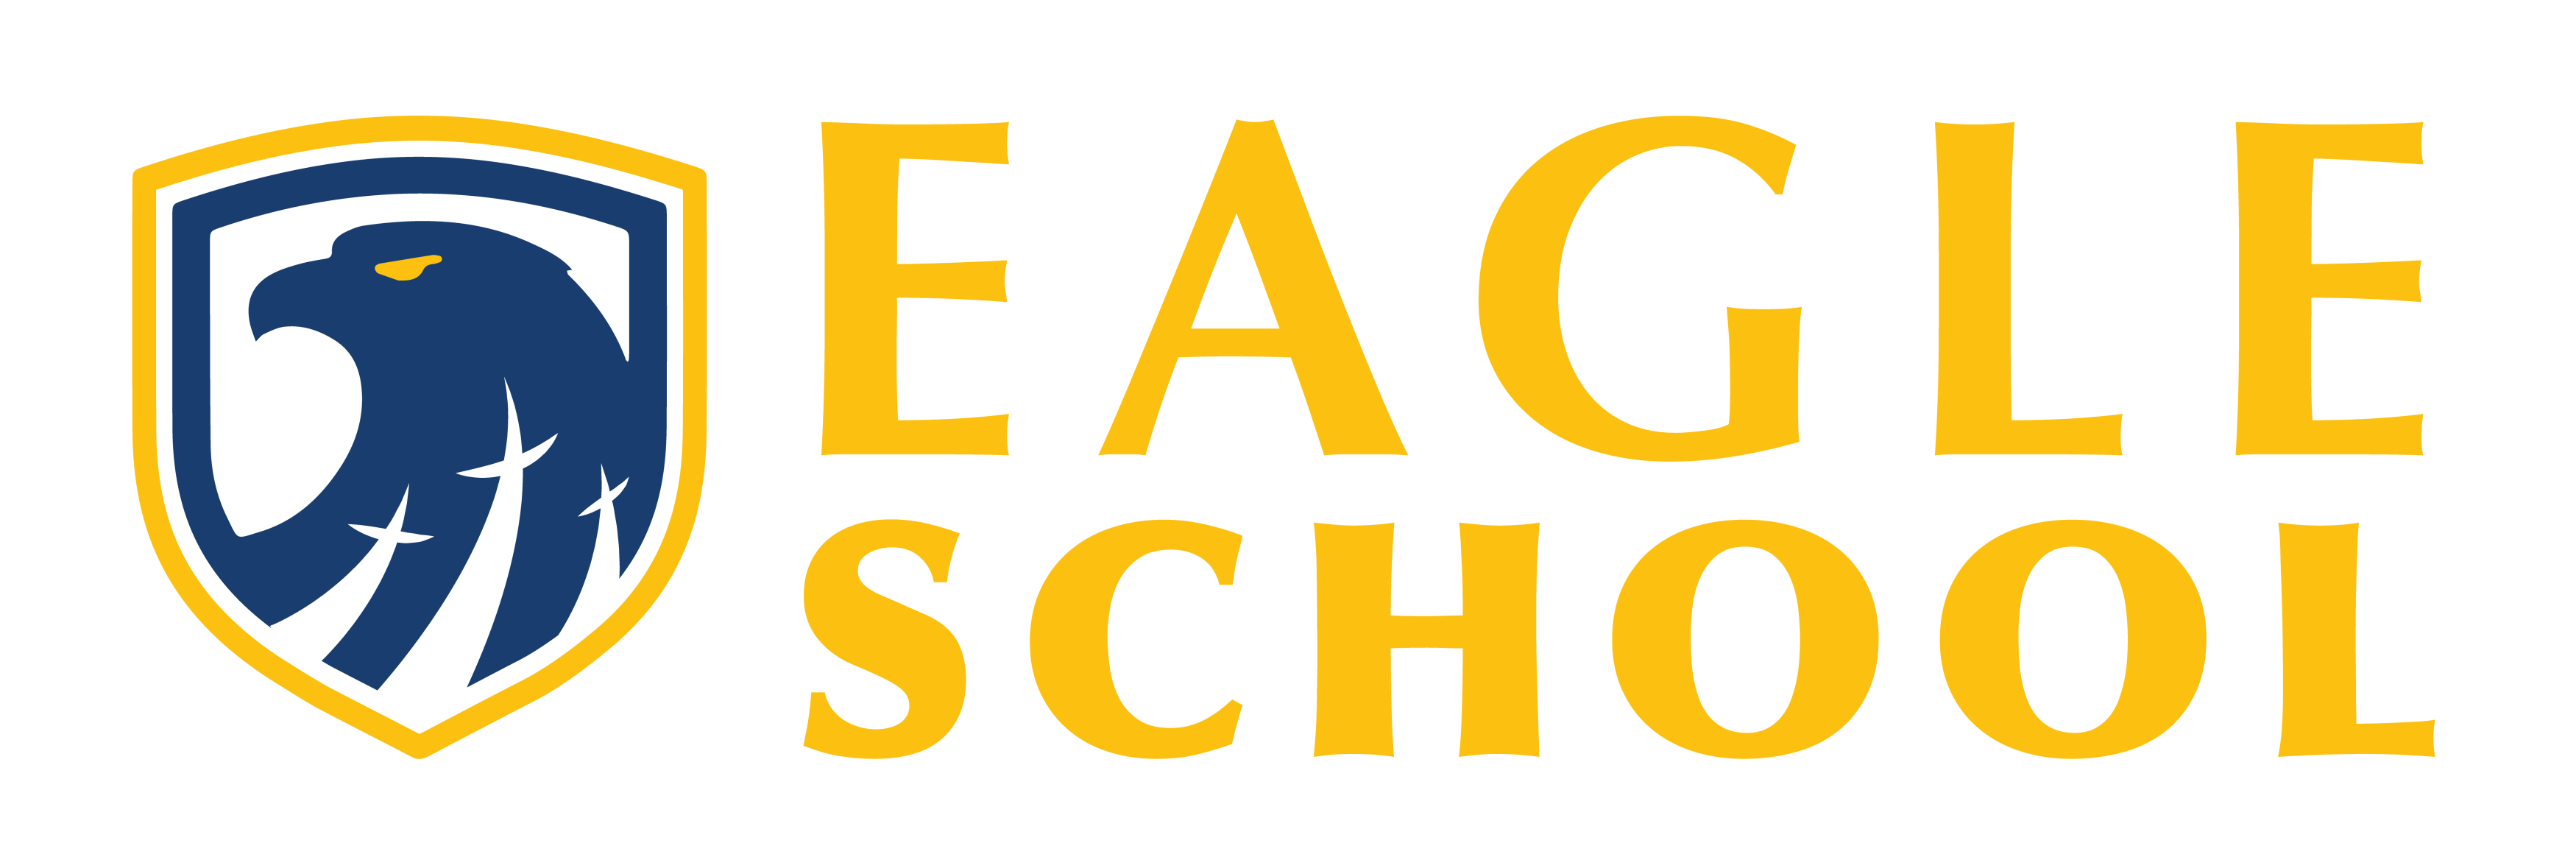 Logo for Eagle School